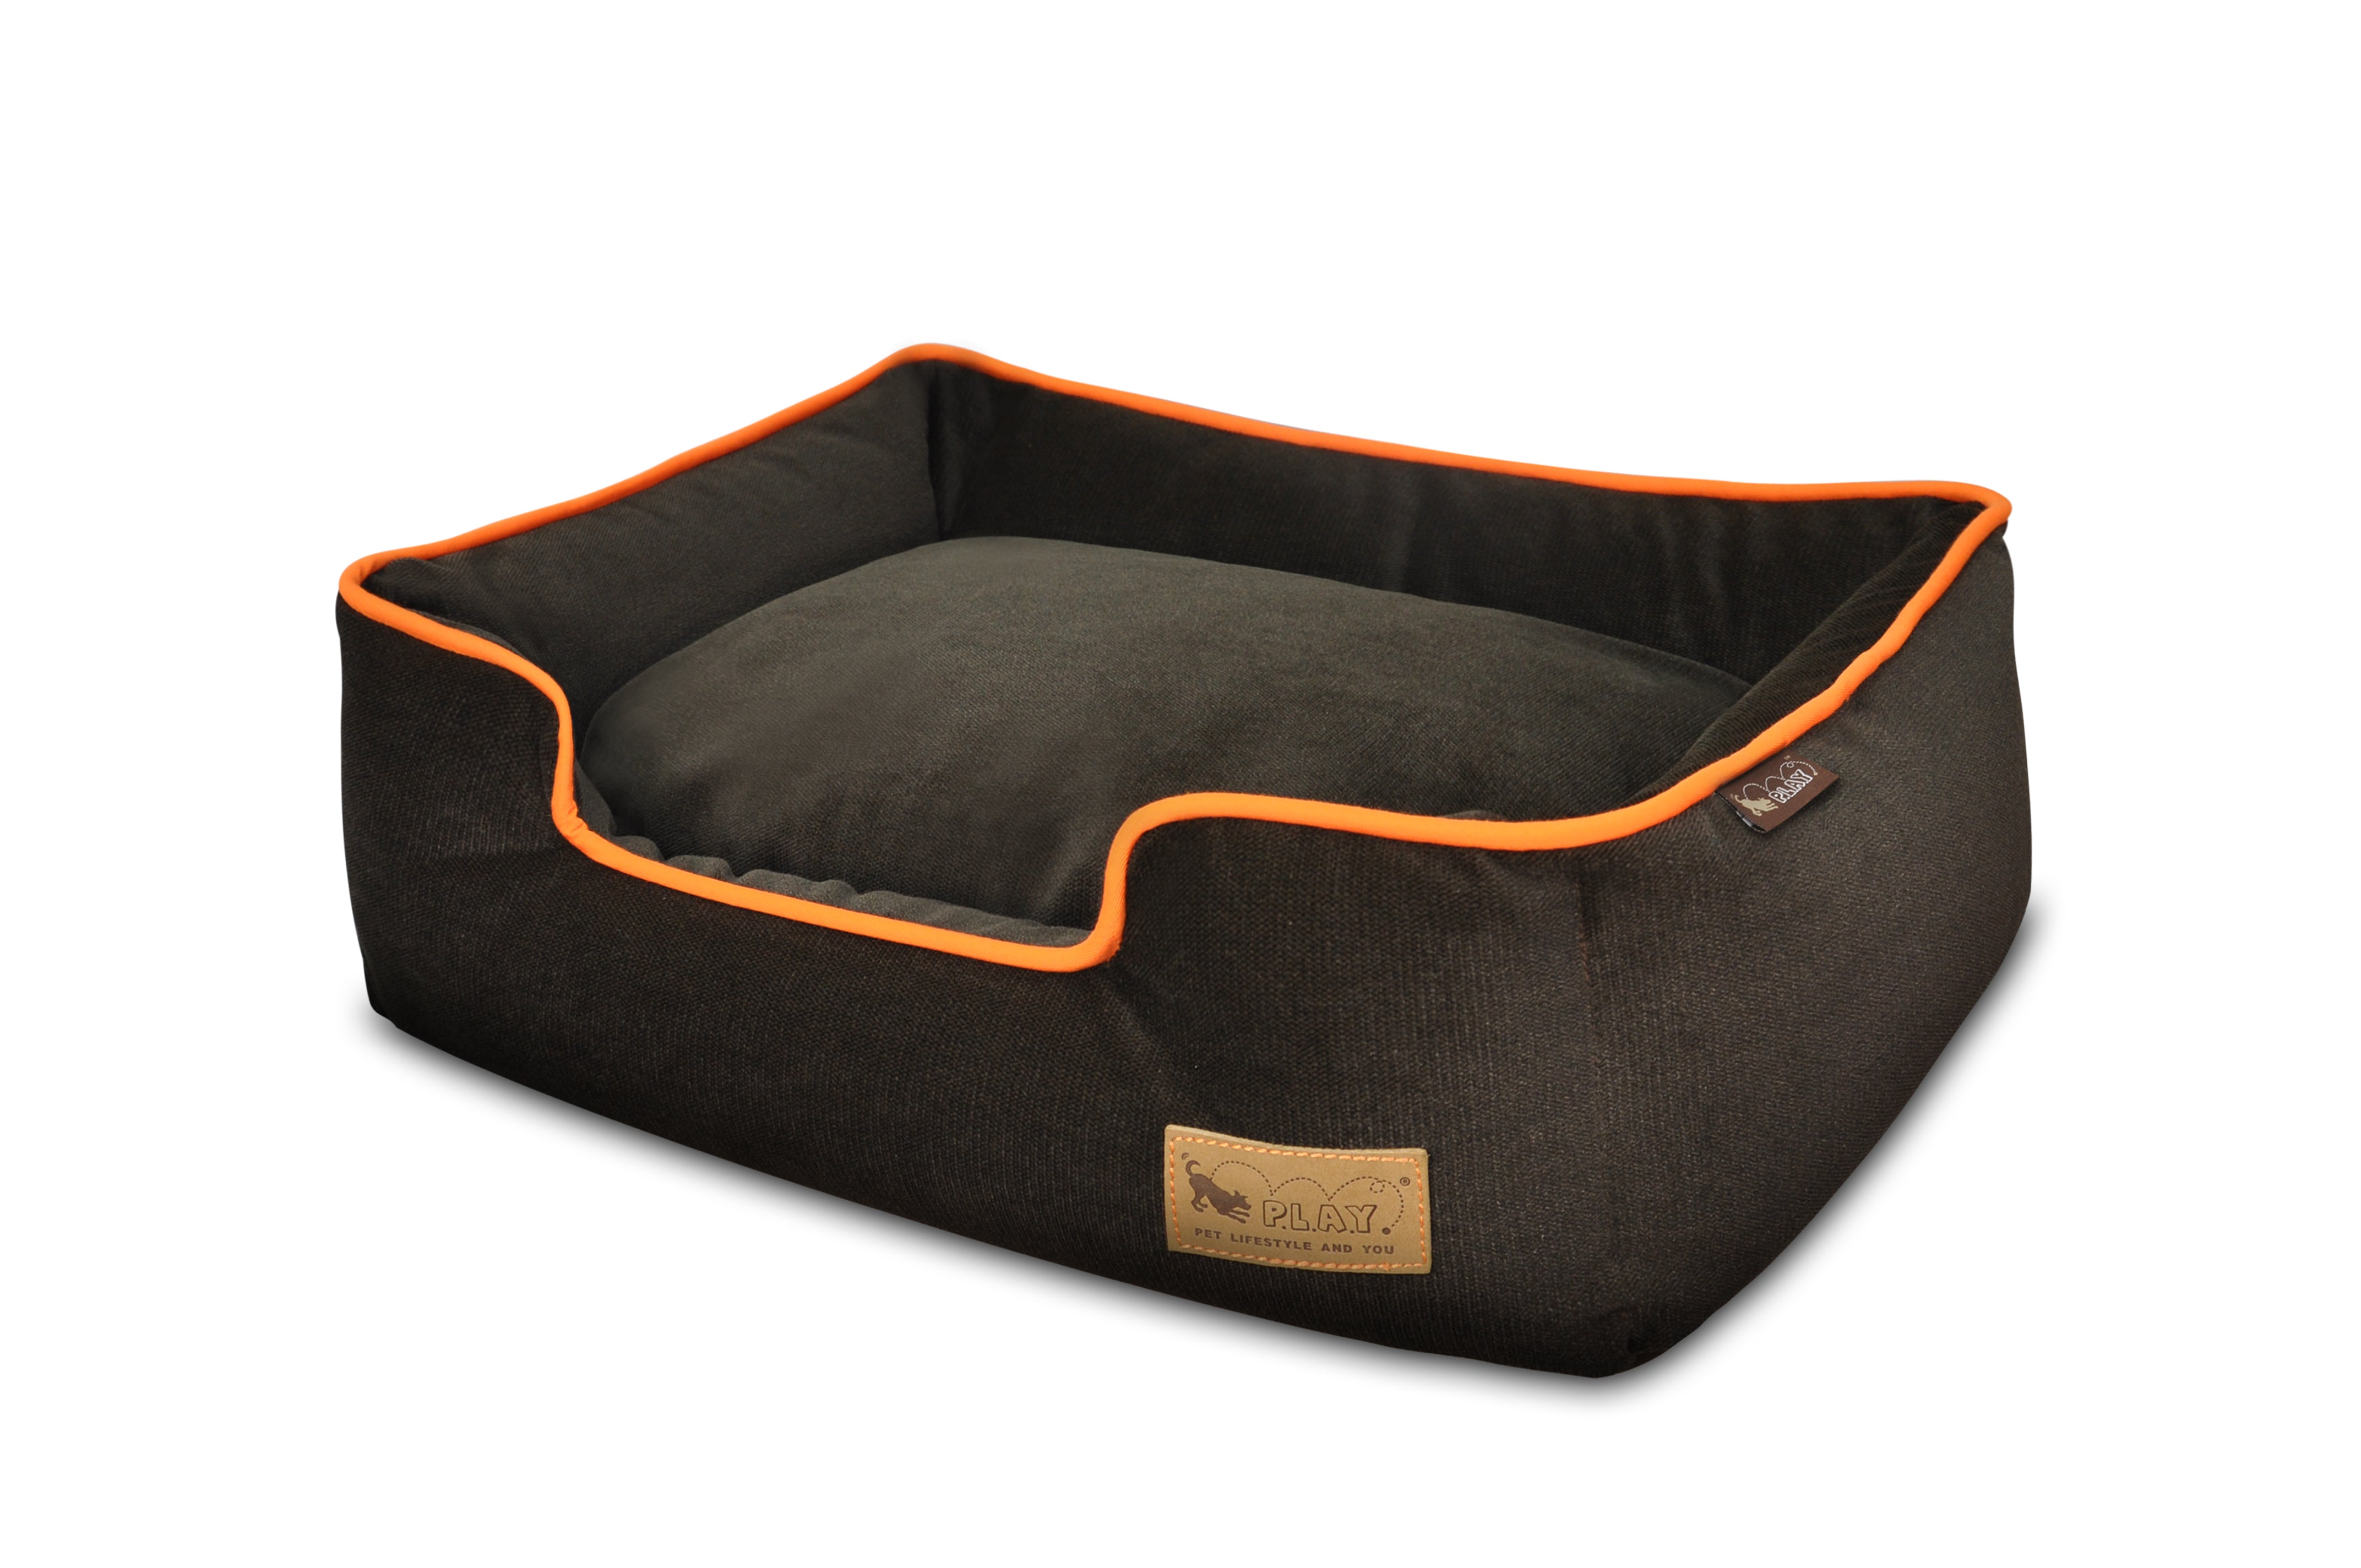 [Pre-order]Lounge Dog Bed: Urban Plush WalnutBrown/Orange